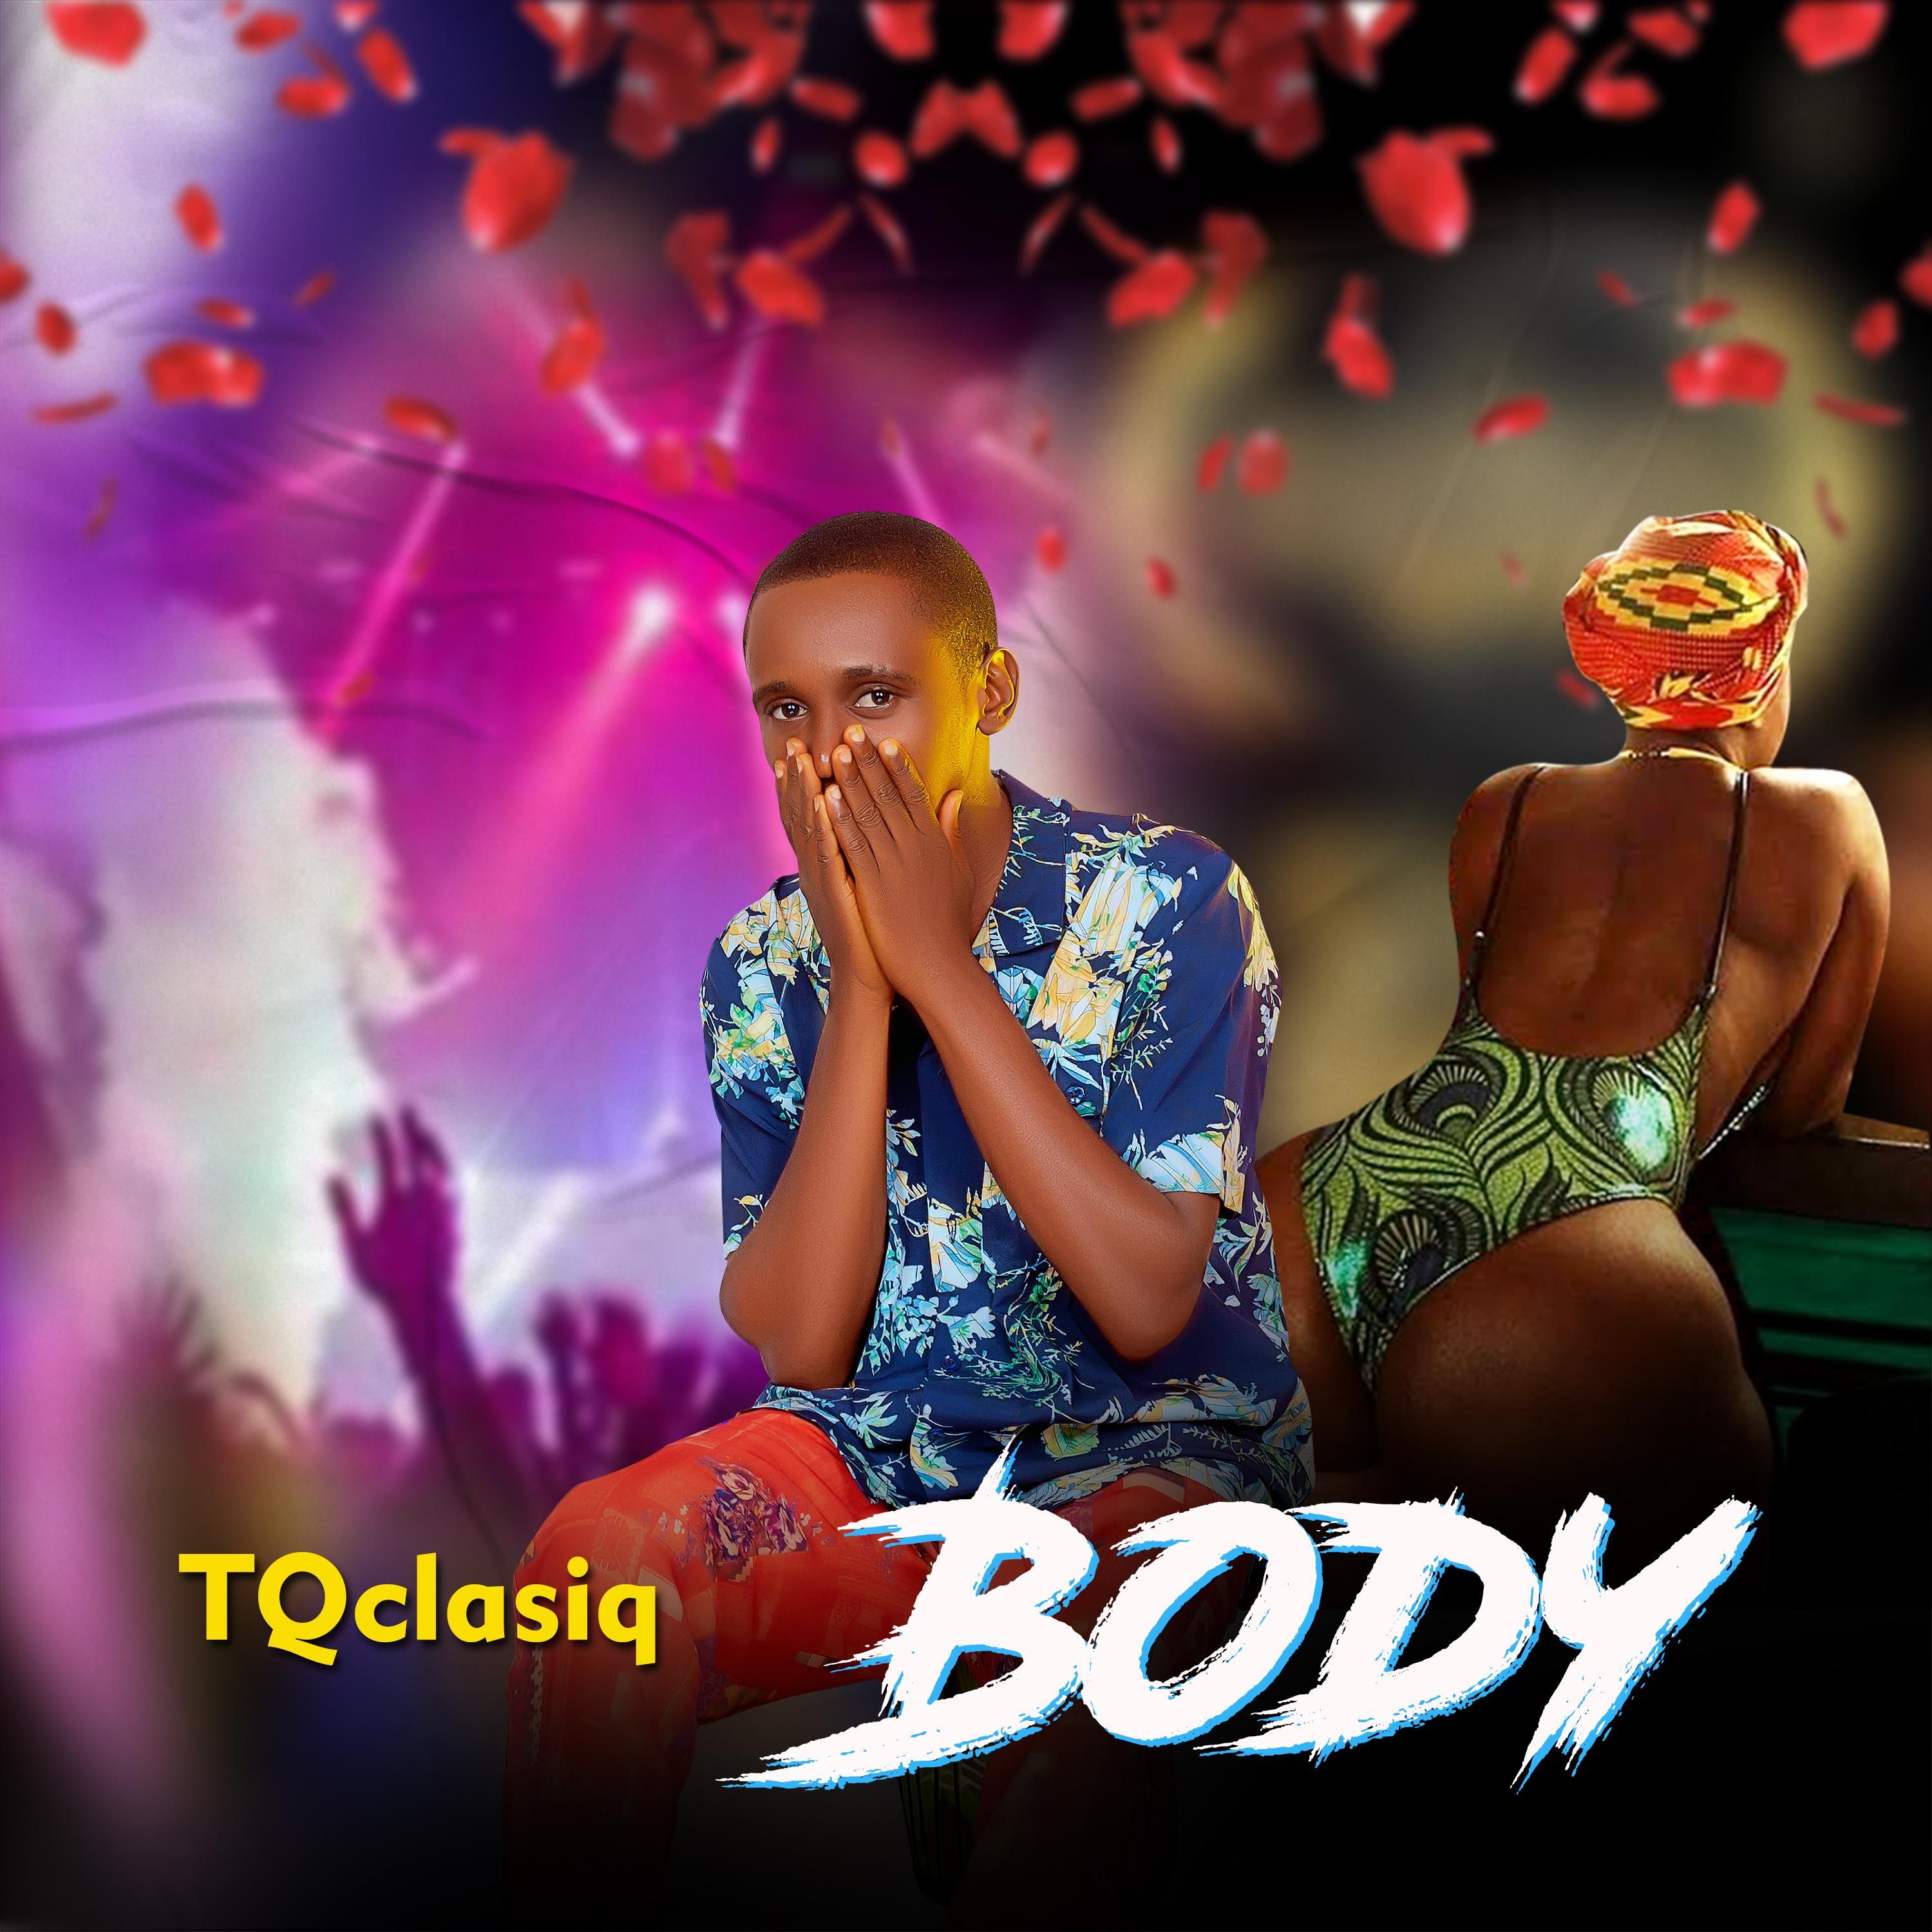 TQclasiq - Body